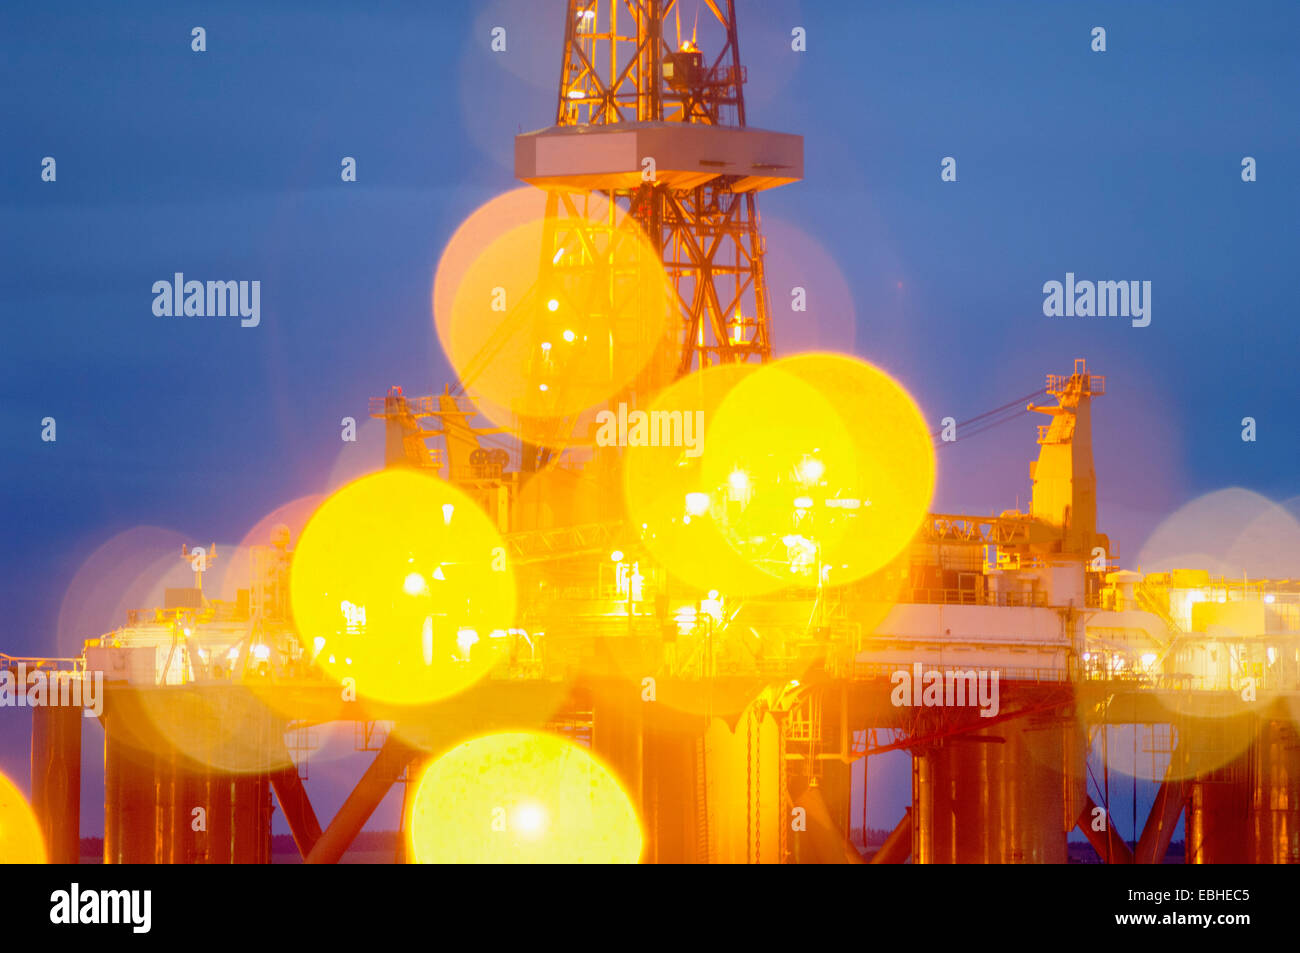 Oil or gas drilling platform, Invergordon, Scotland Stock Photo